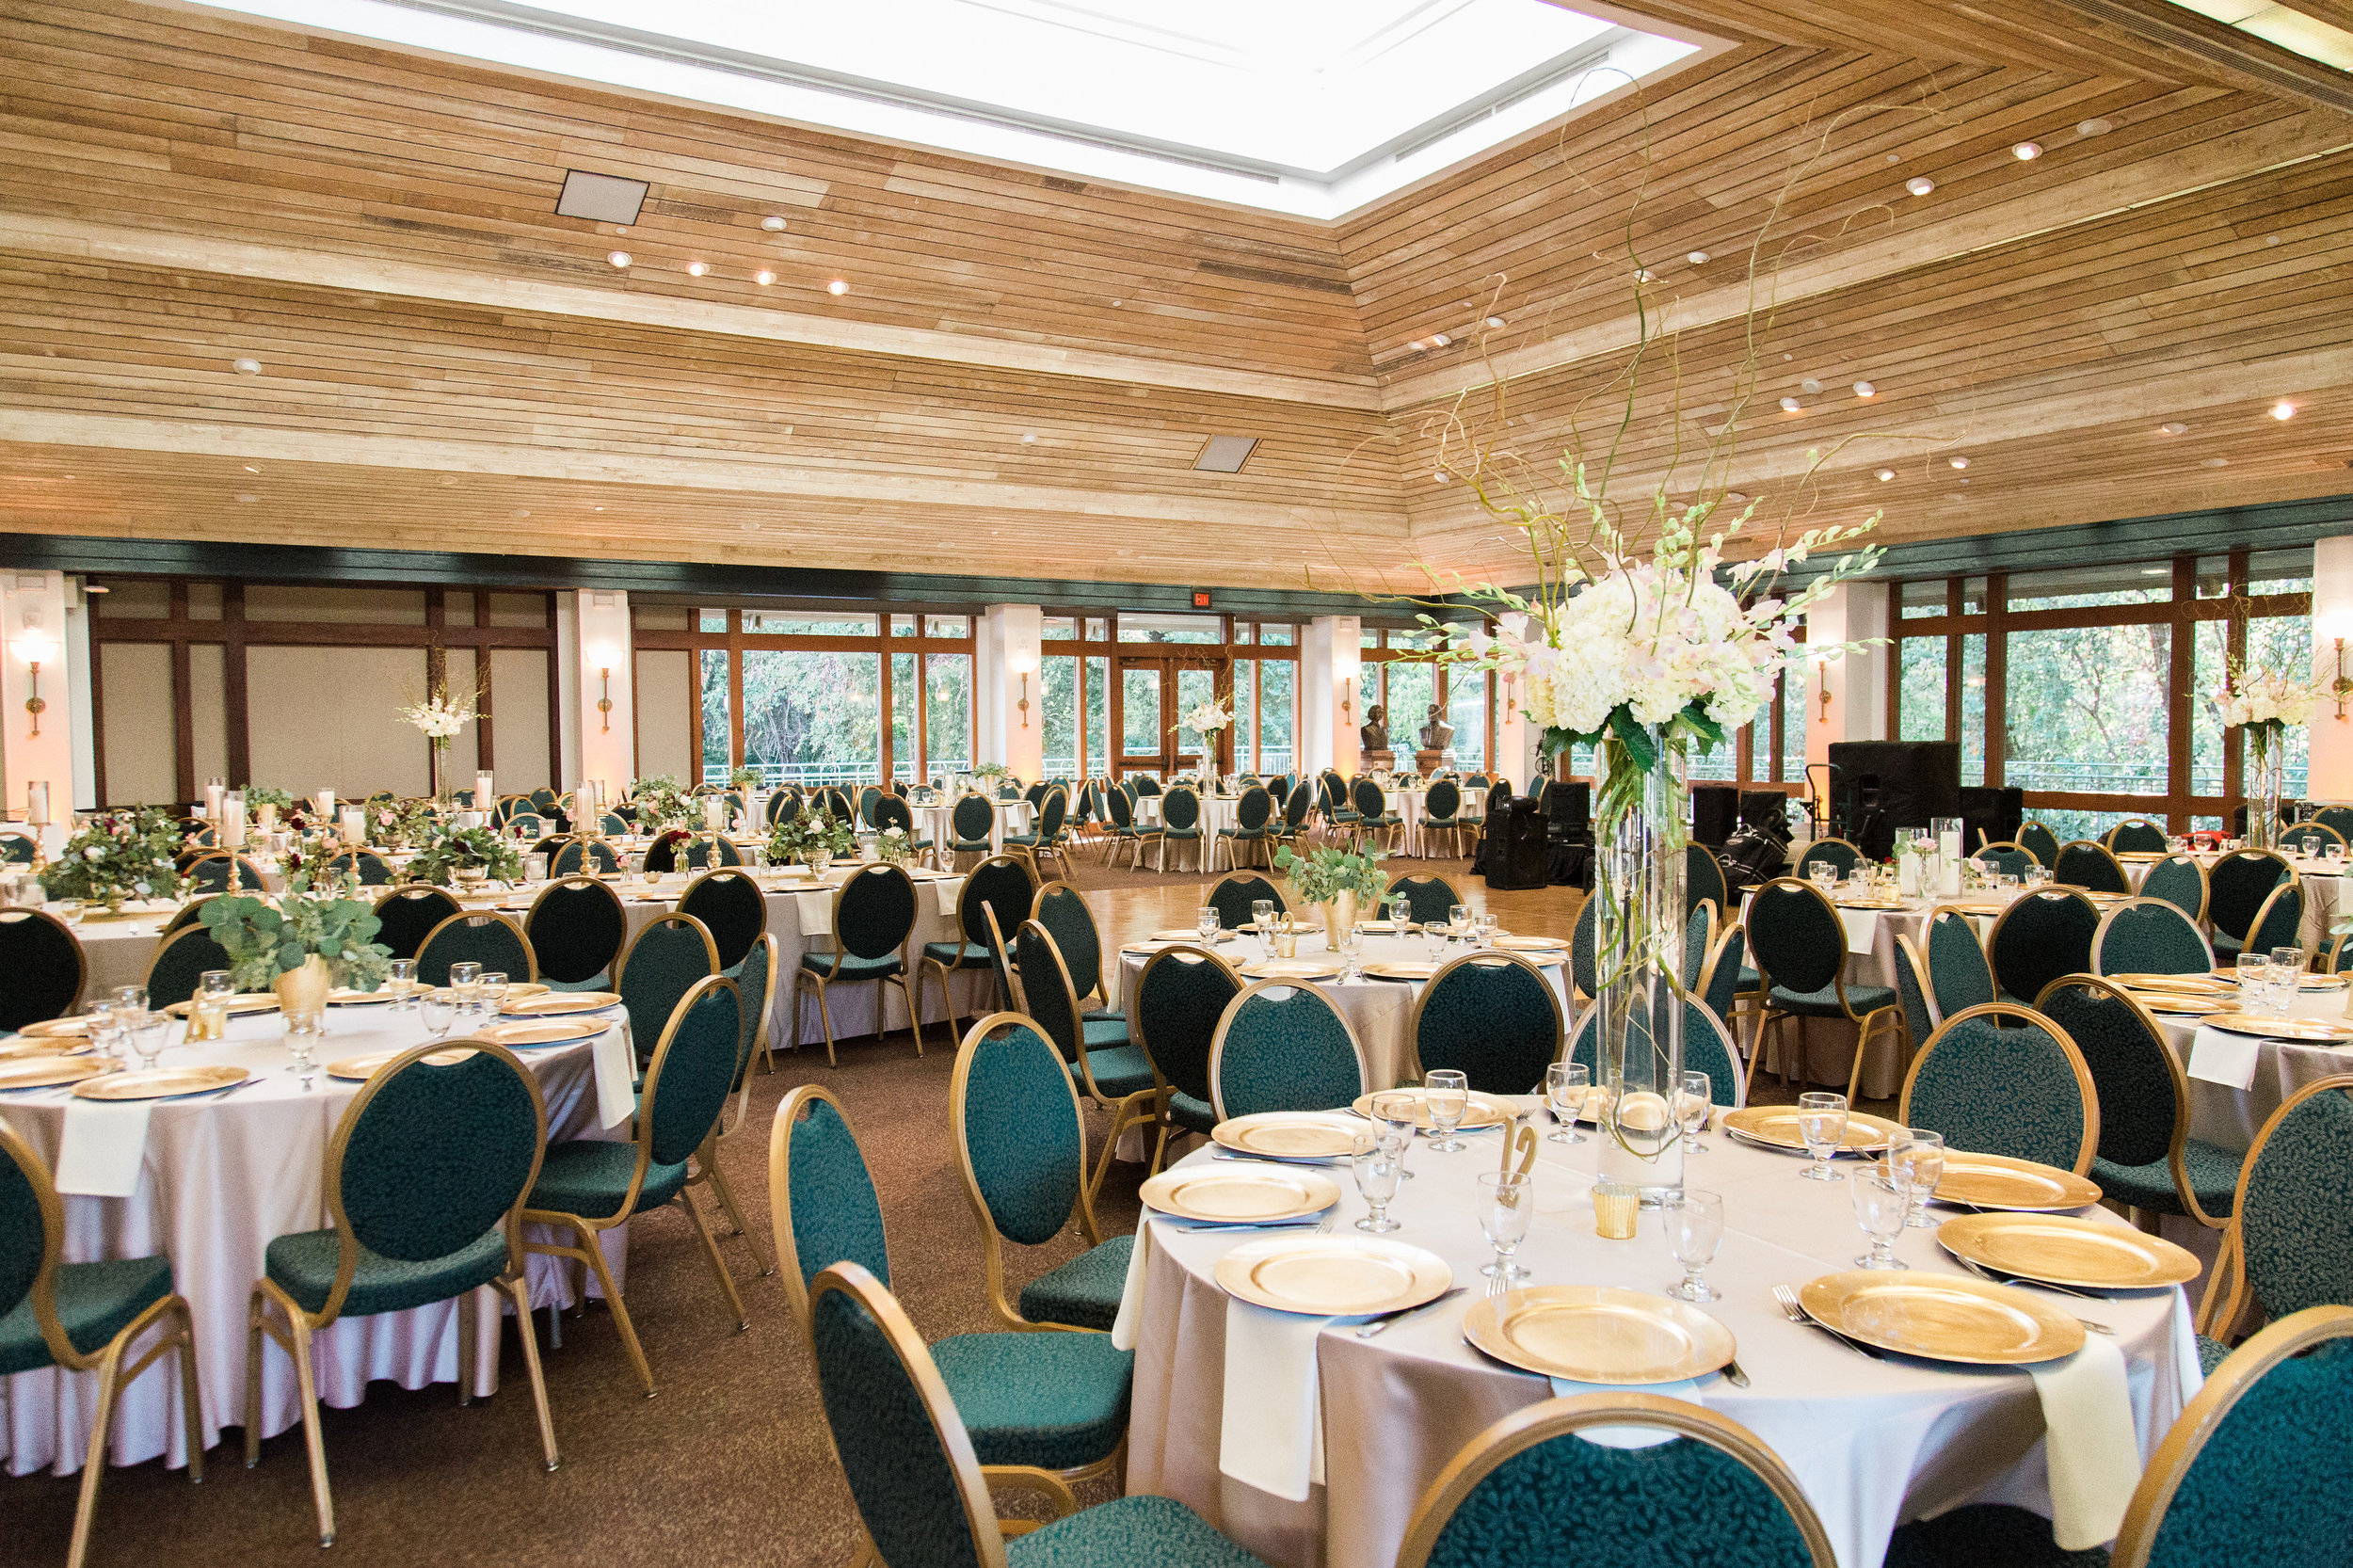  full seating for wedding reception in ballroom 